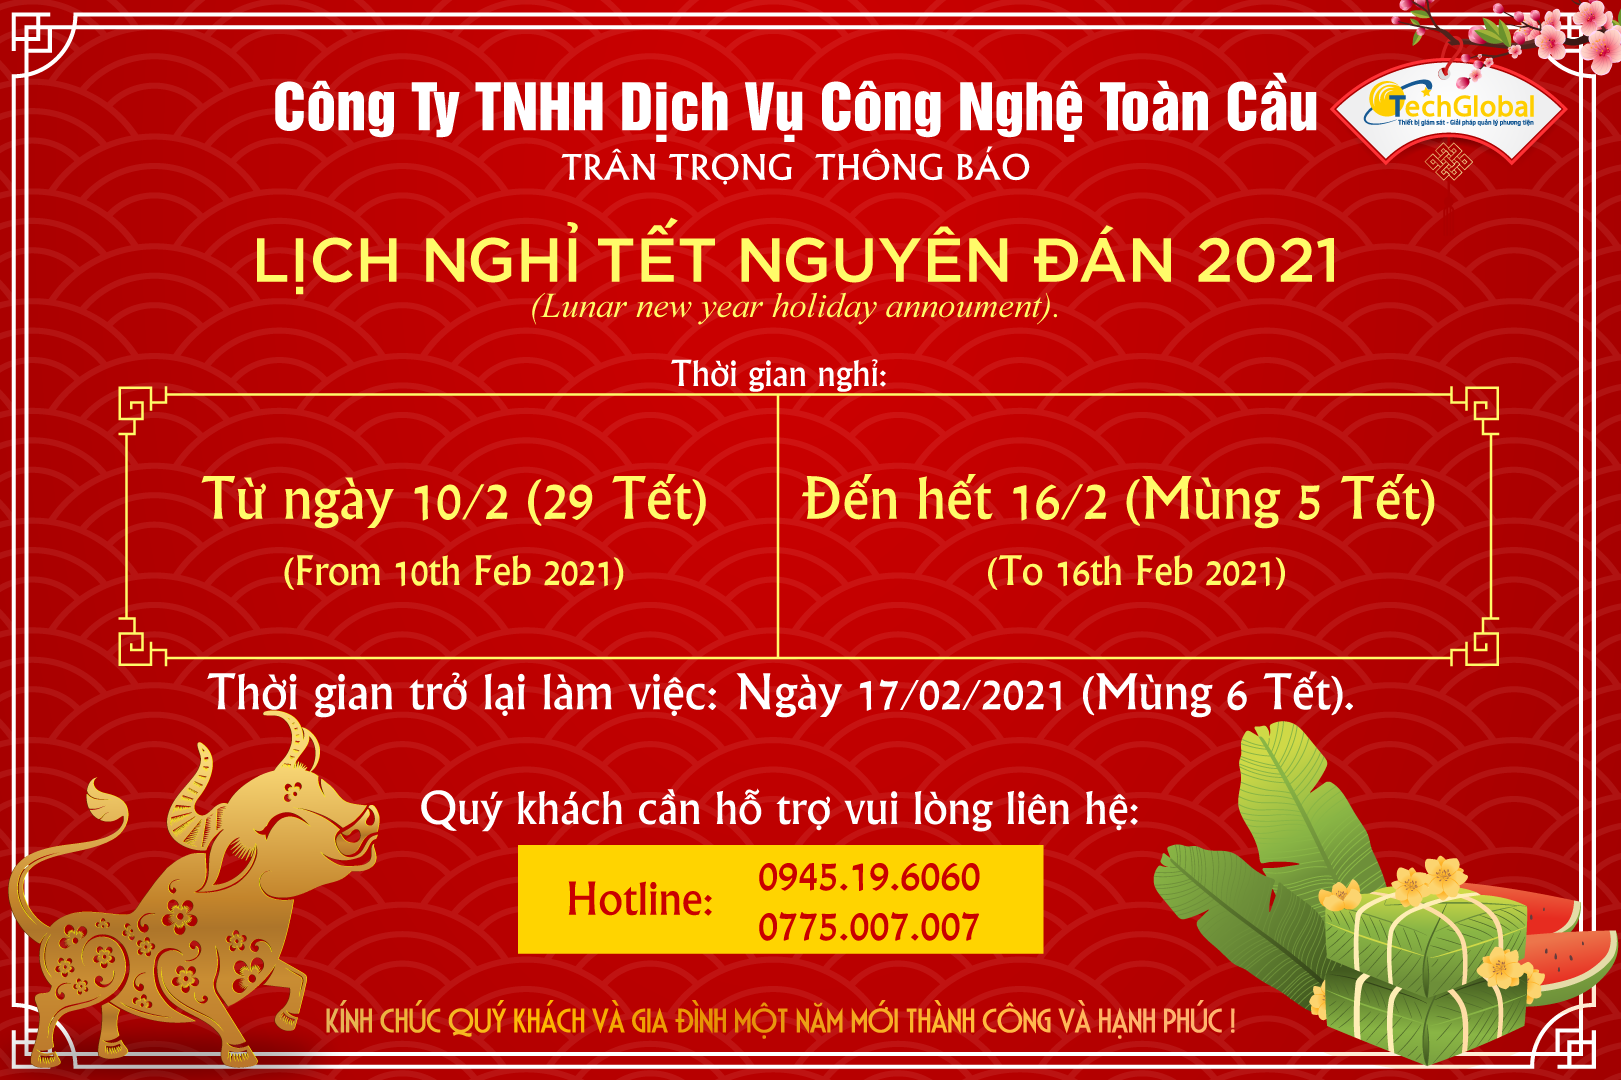 2019/Thong-bao-nghi-tet-am-2021.png